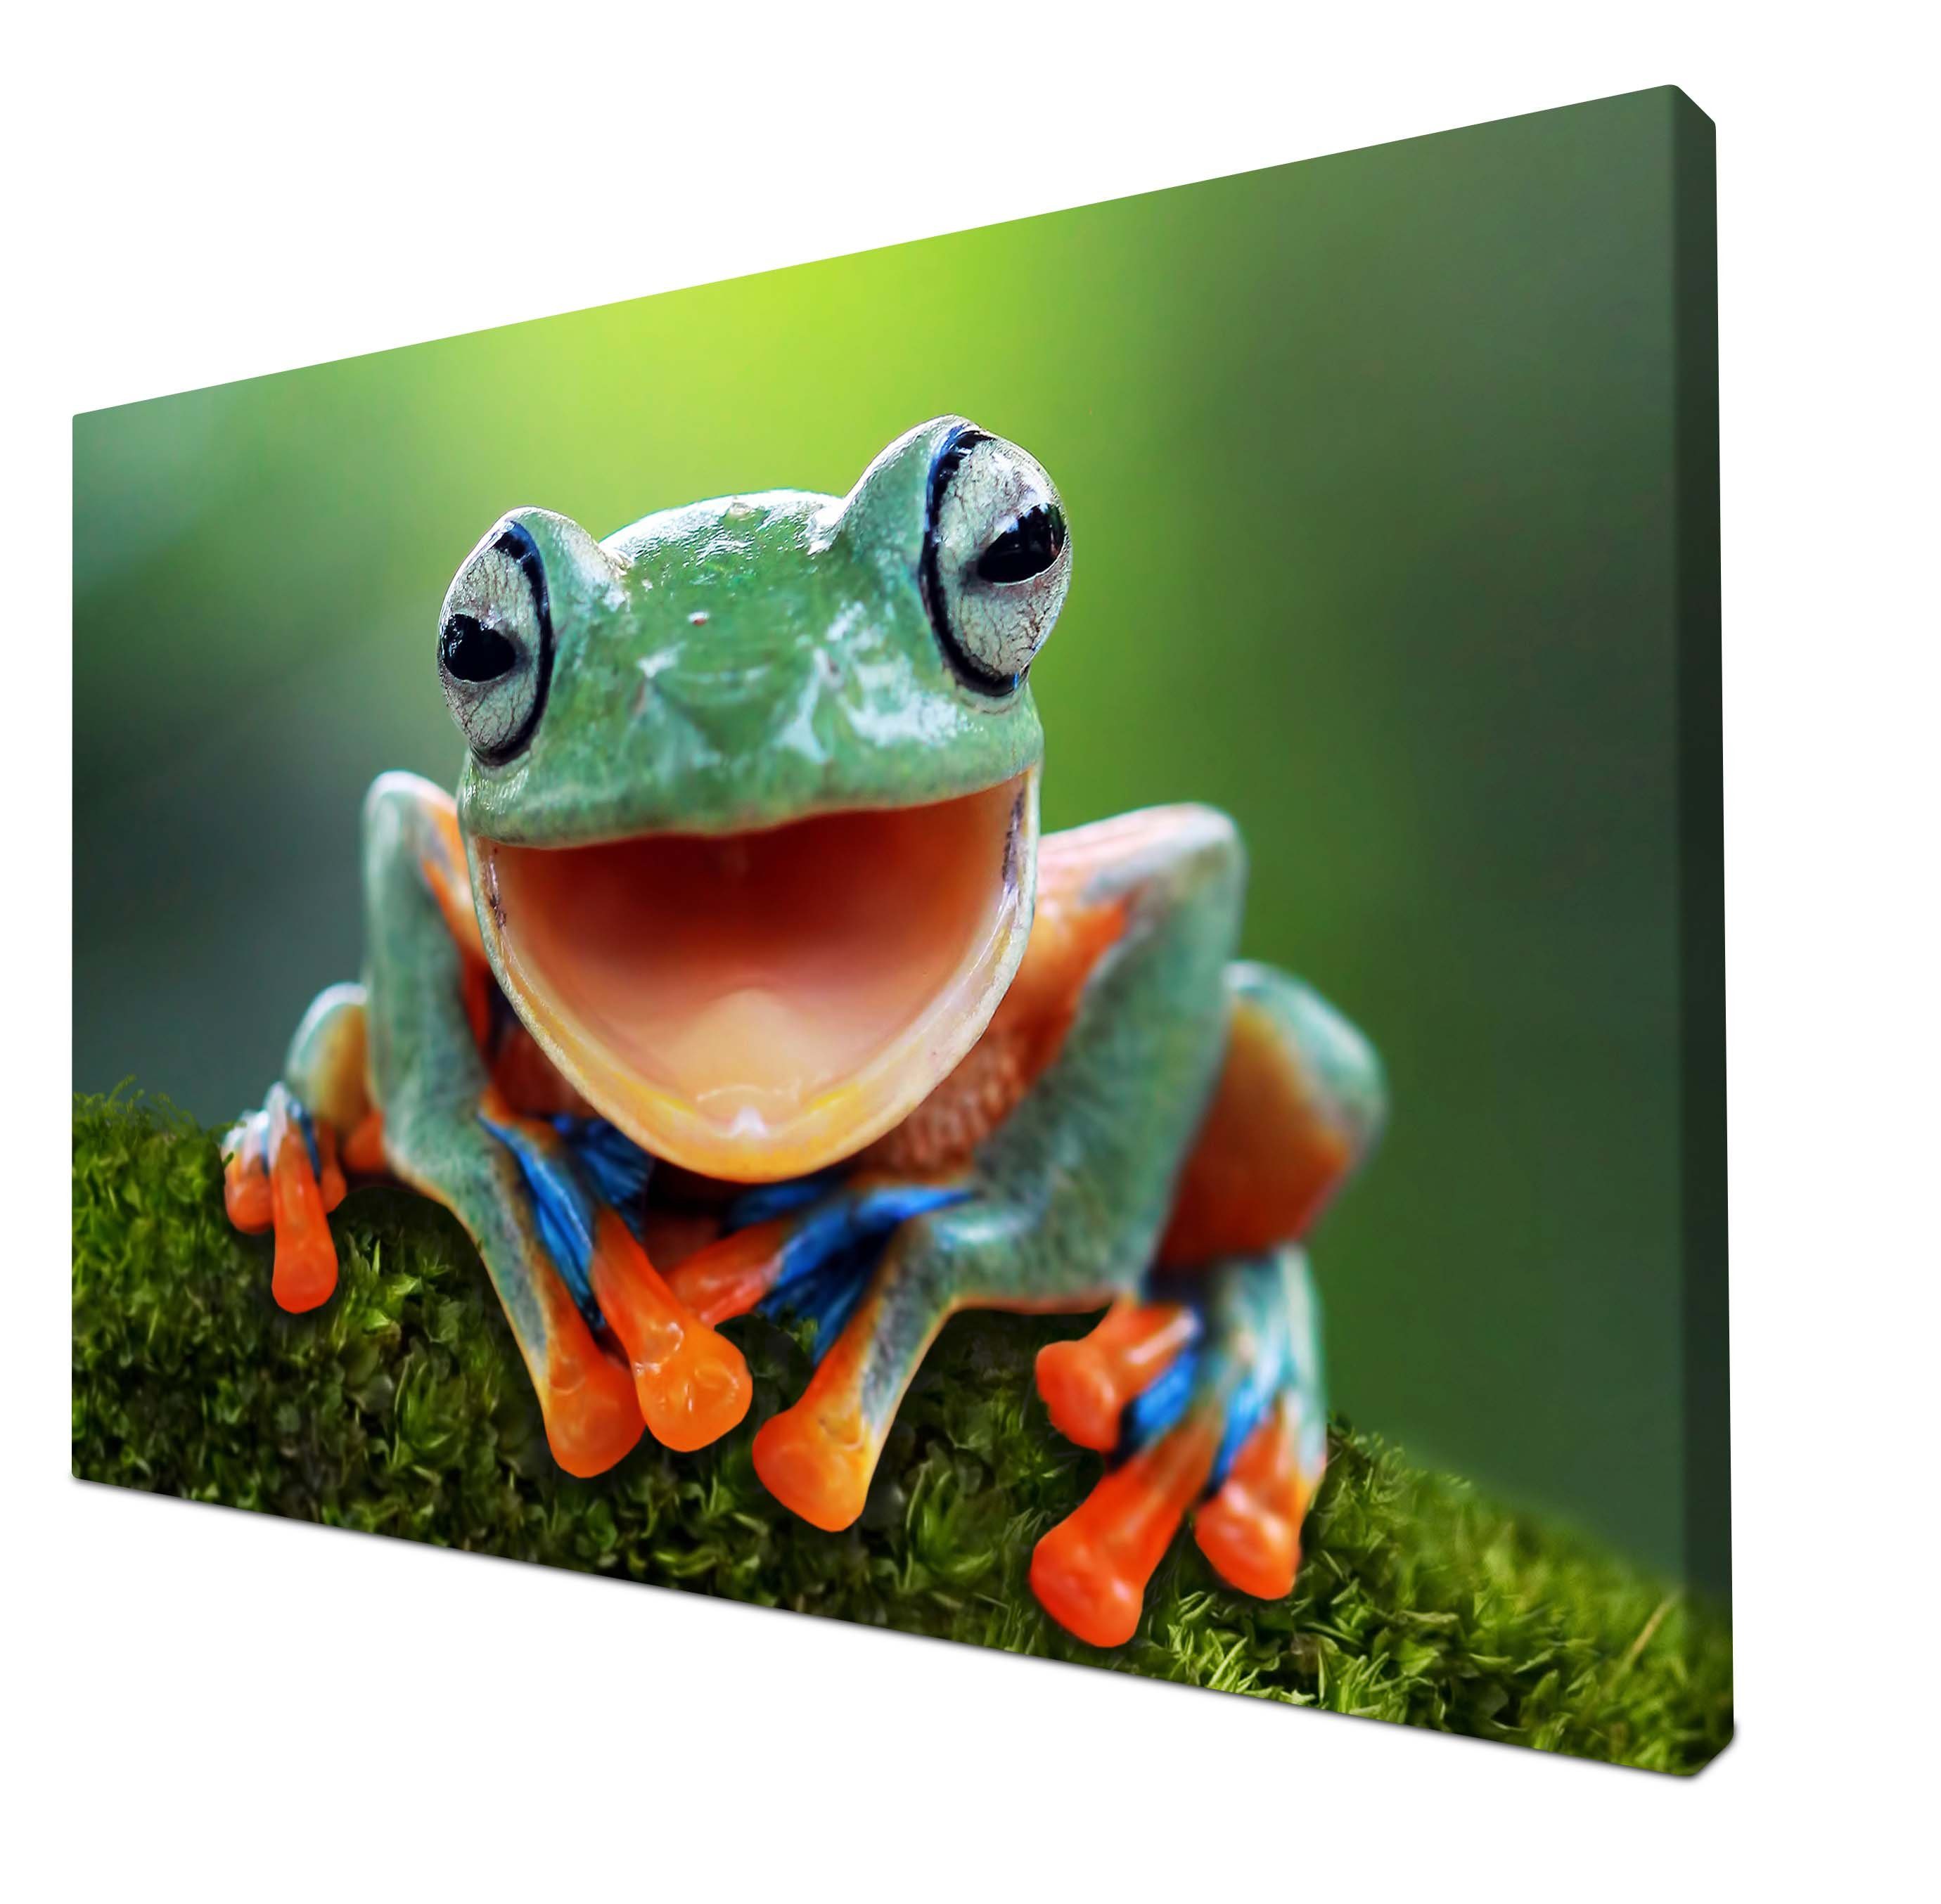 wandmotiv24 Leinwandbild grüner Frosch, Tier, Moos, Tiere (1 St), Wandbild, Wanddeko, Leinwandbilder in versch. Größen